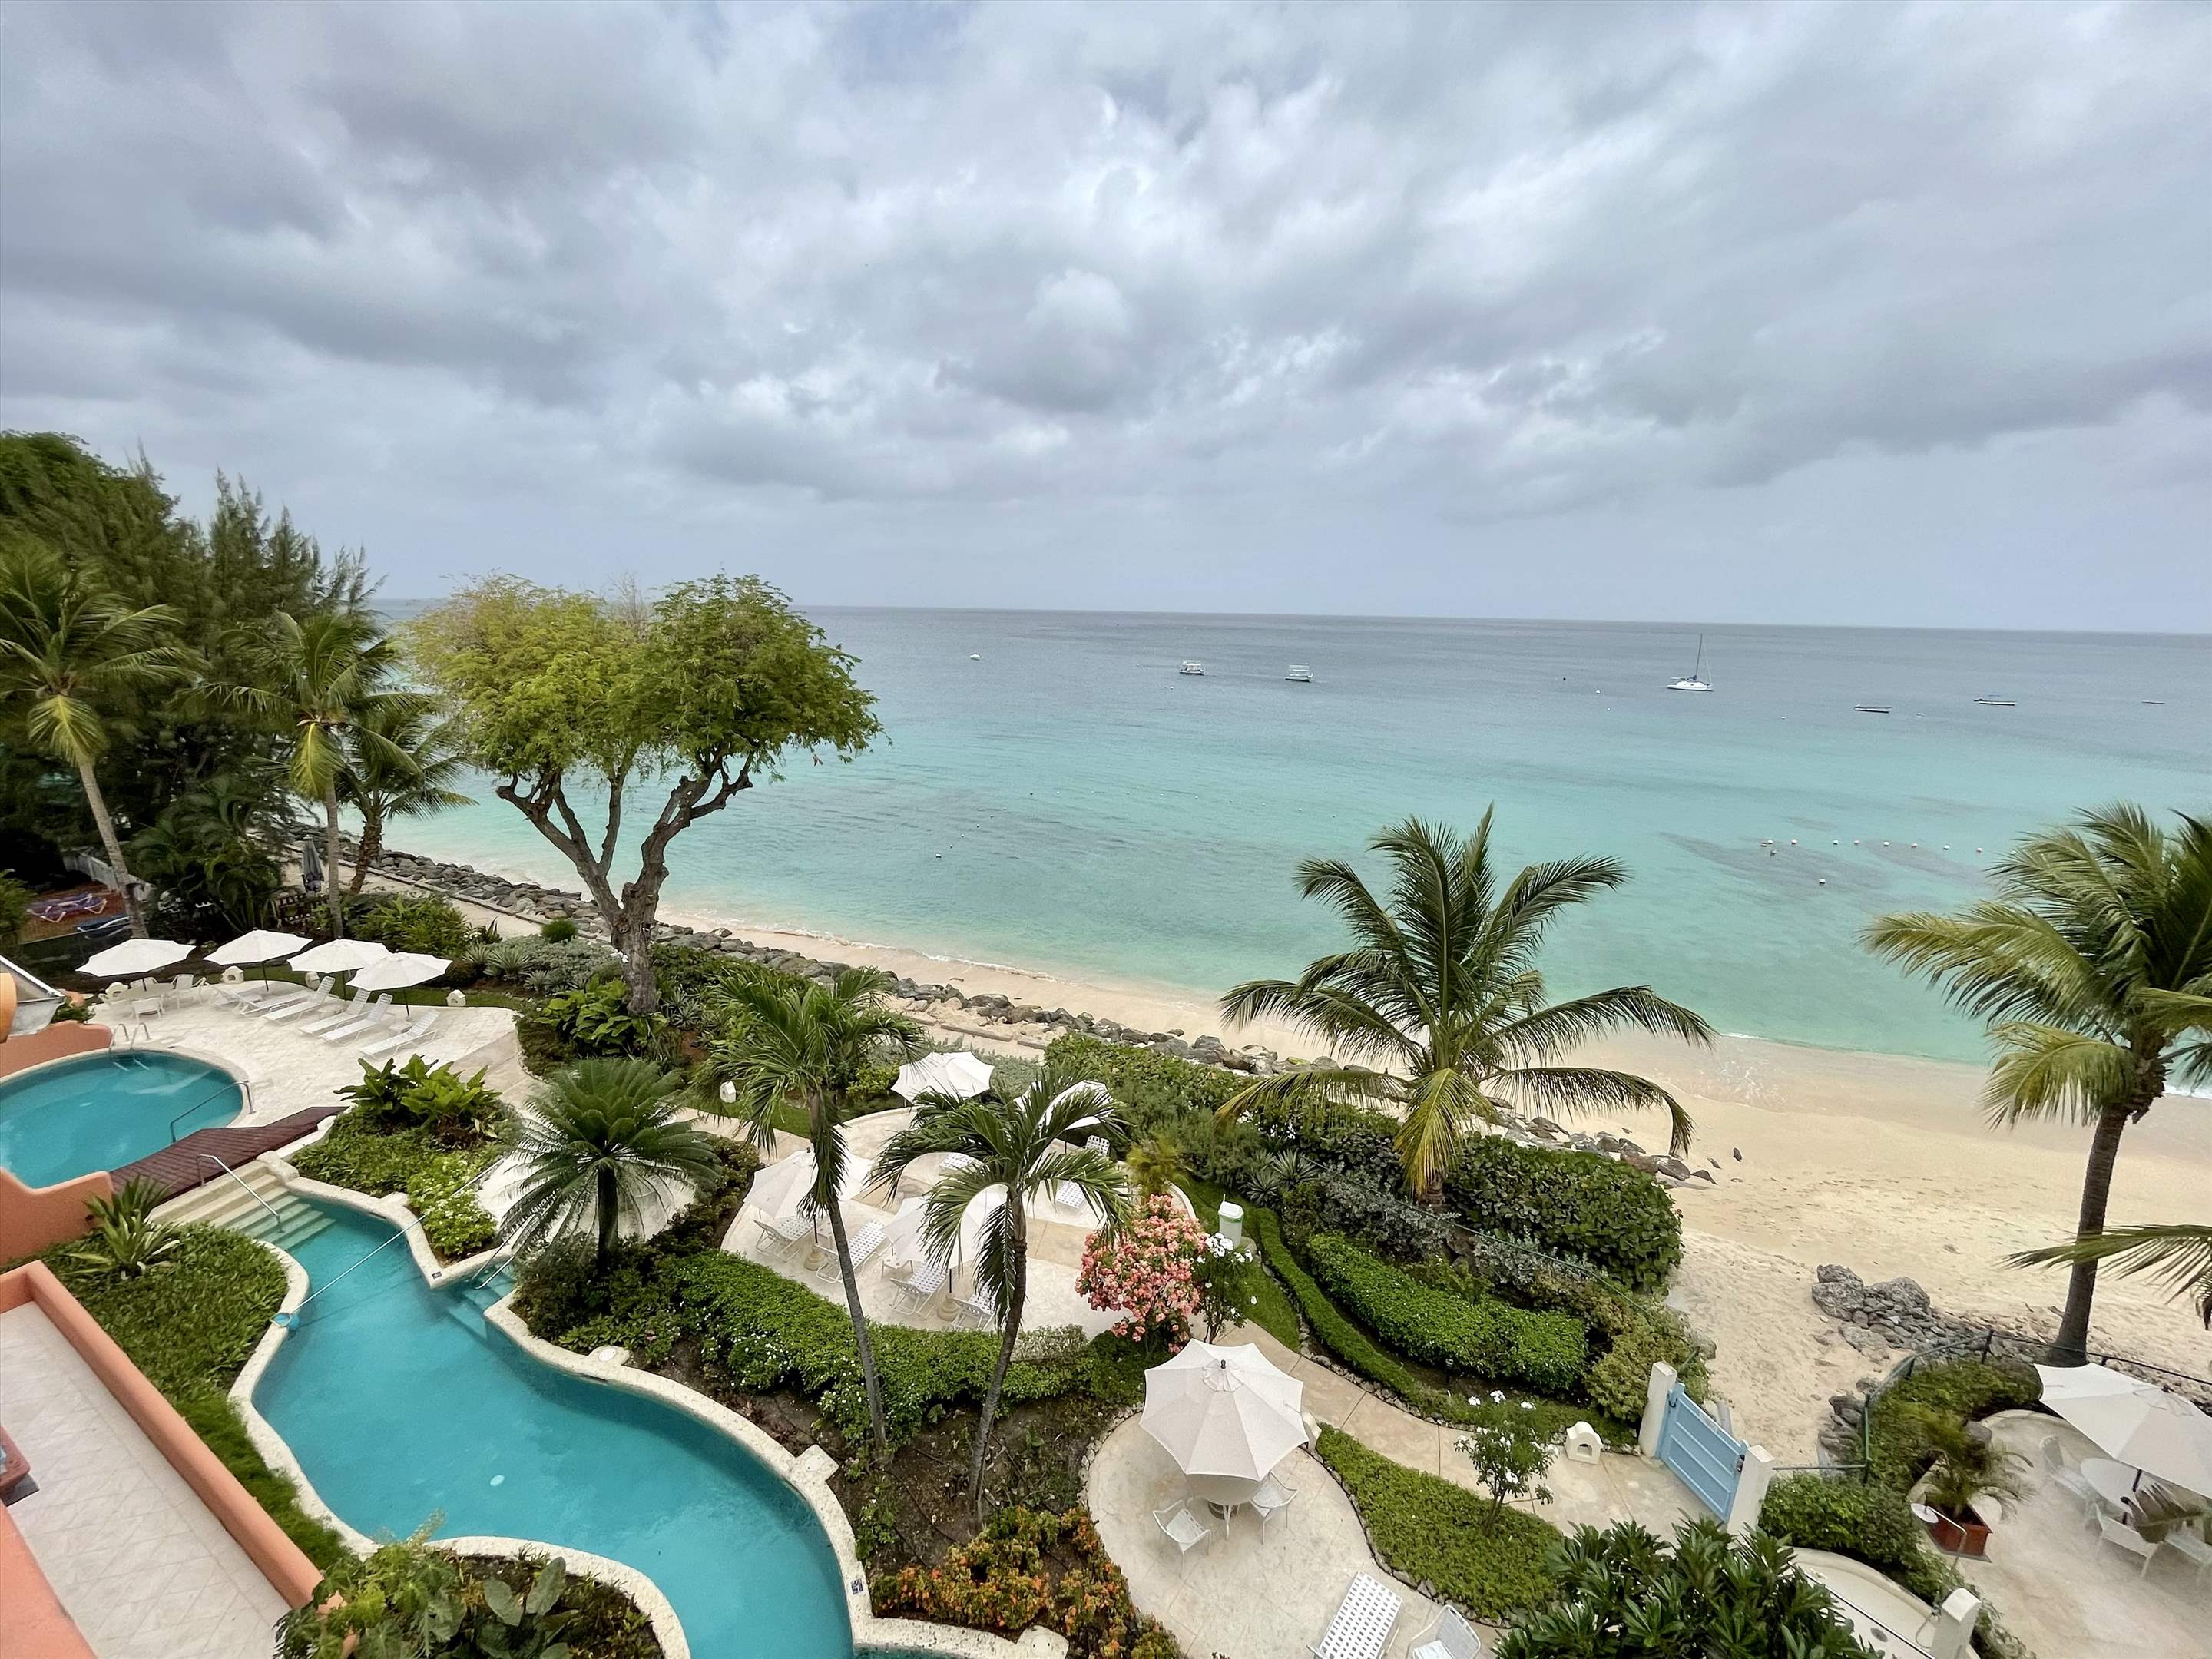 Villas on the Beach 403, 2 bedroom, 2 bedroom apartment in St. James & West Coast, Barbados Photo #22